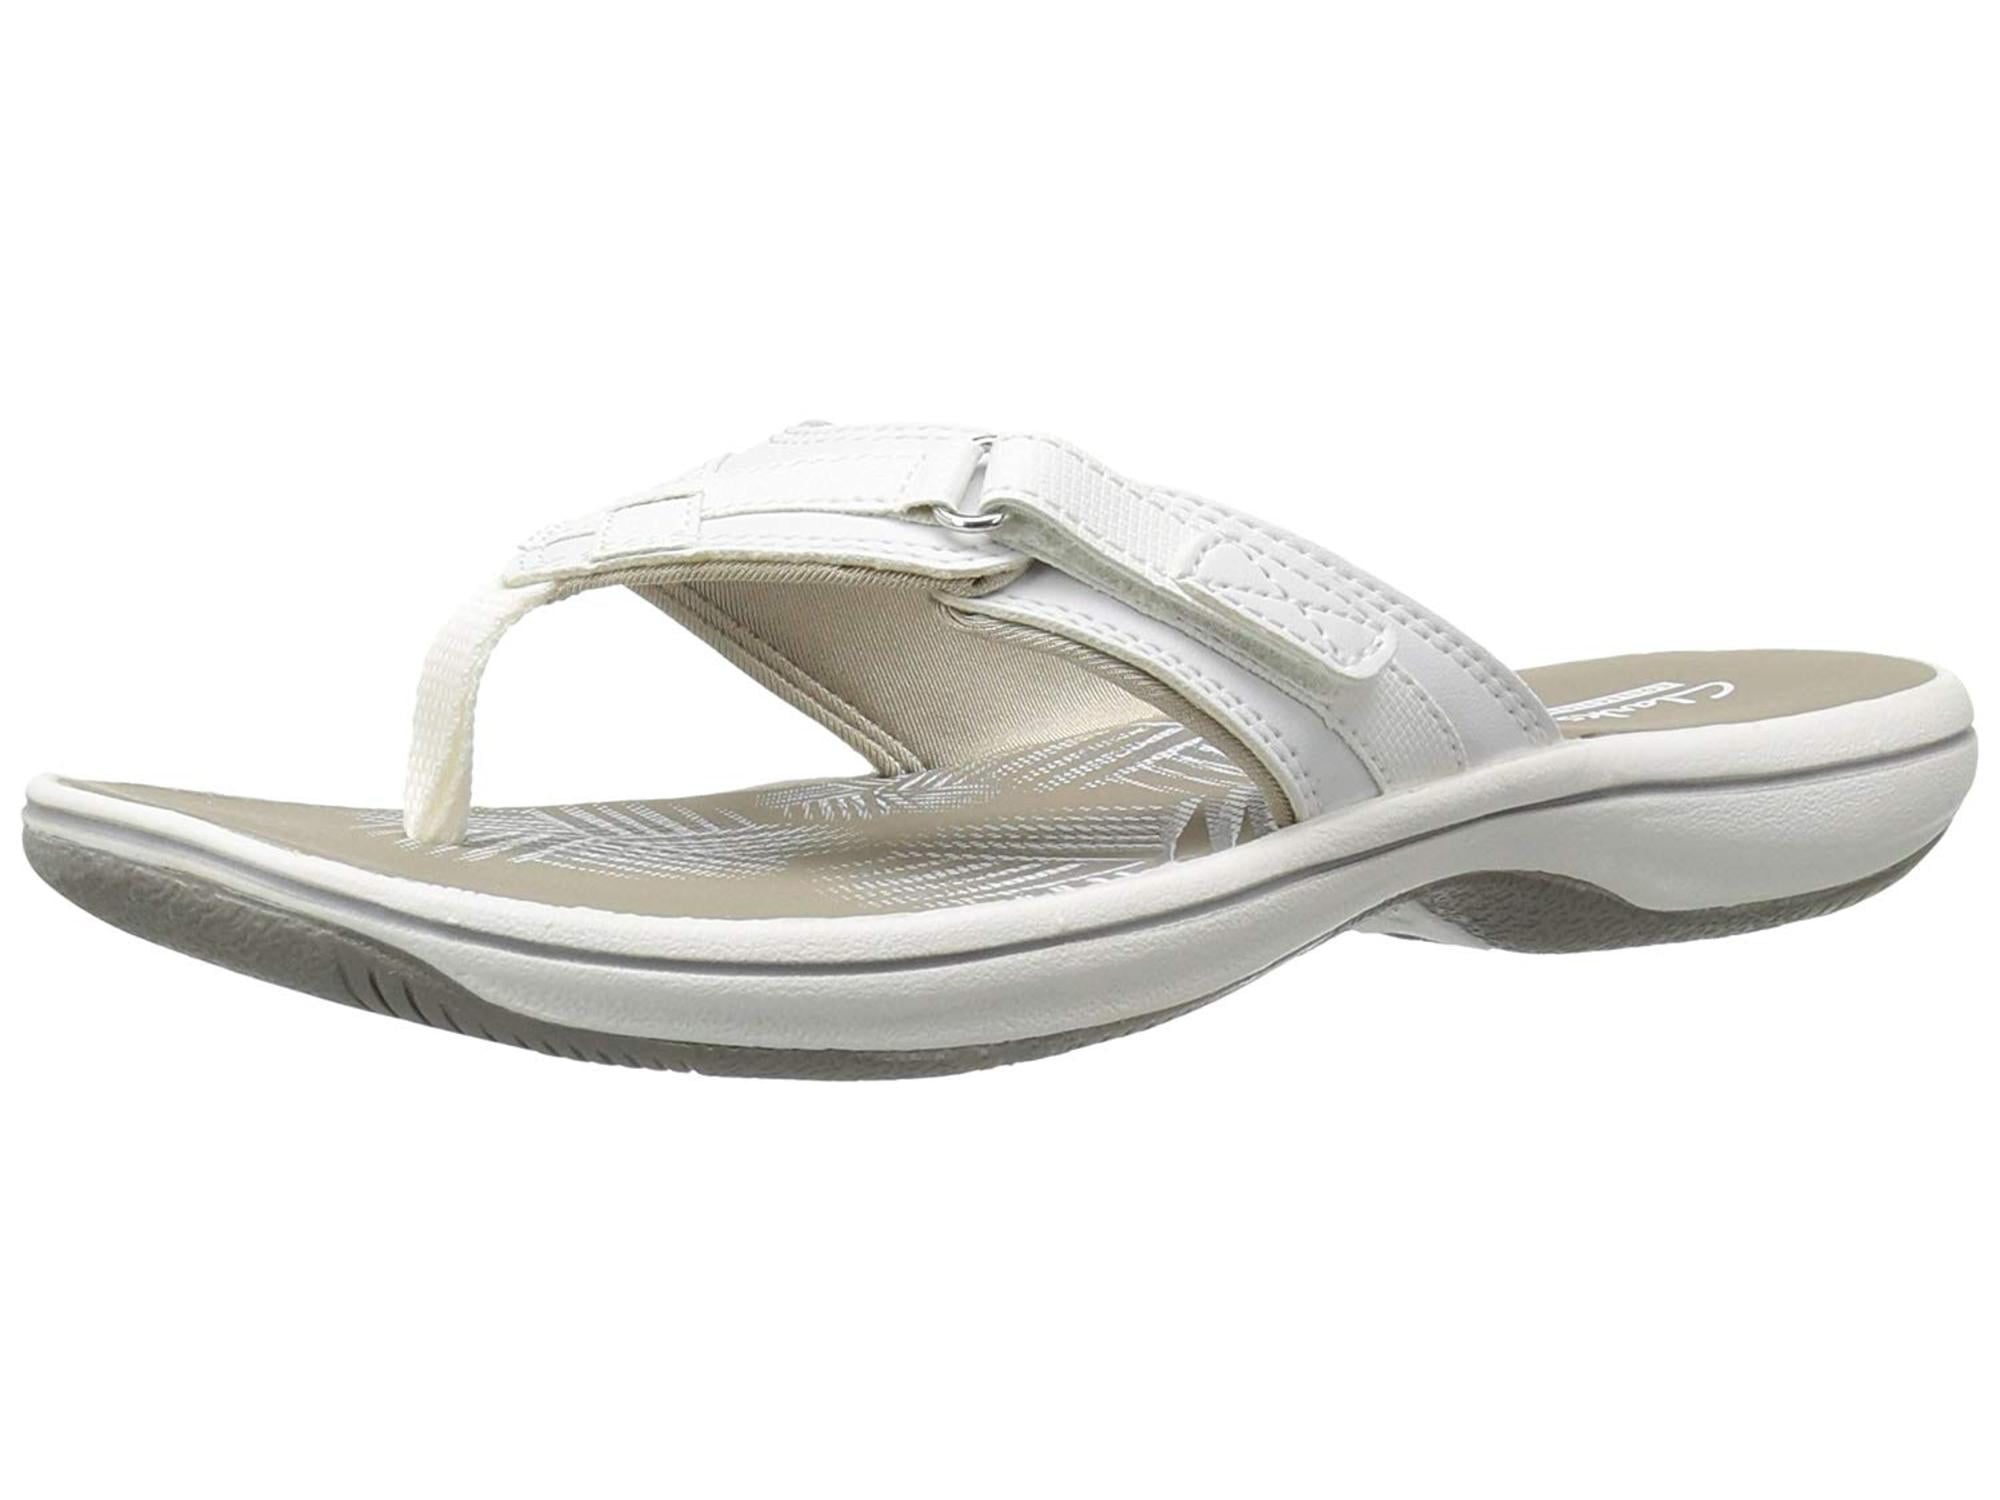 clarks breeze sandals on sale